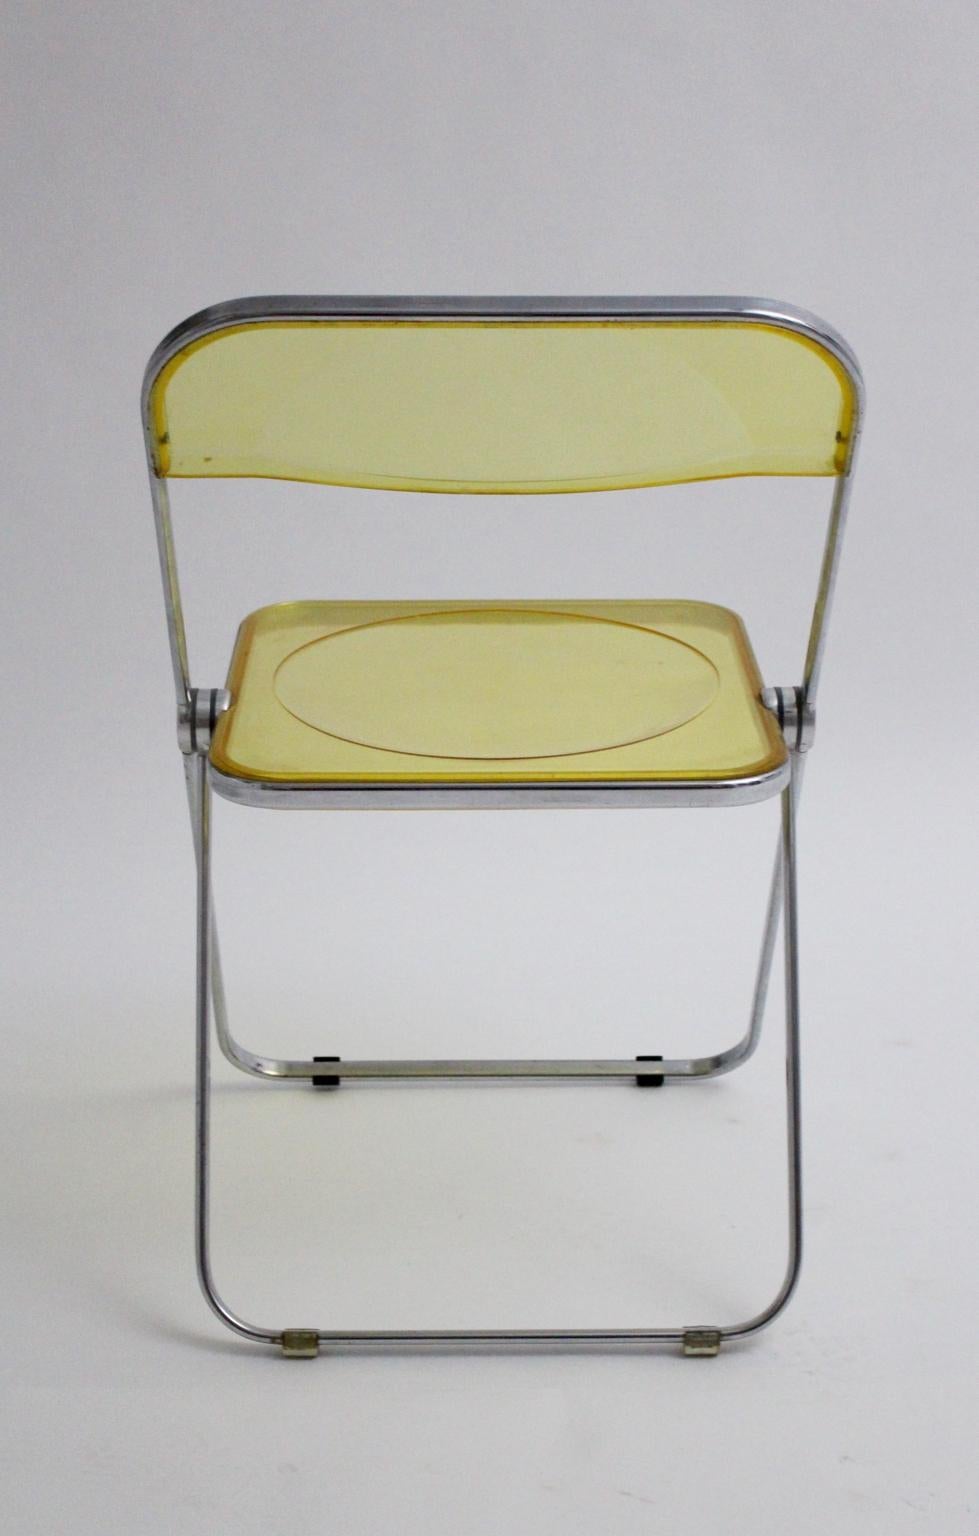 yellow chair plastic